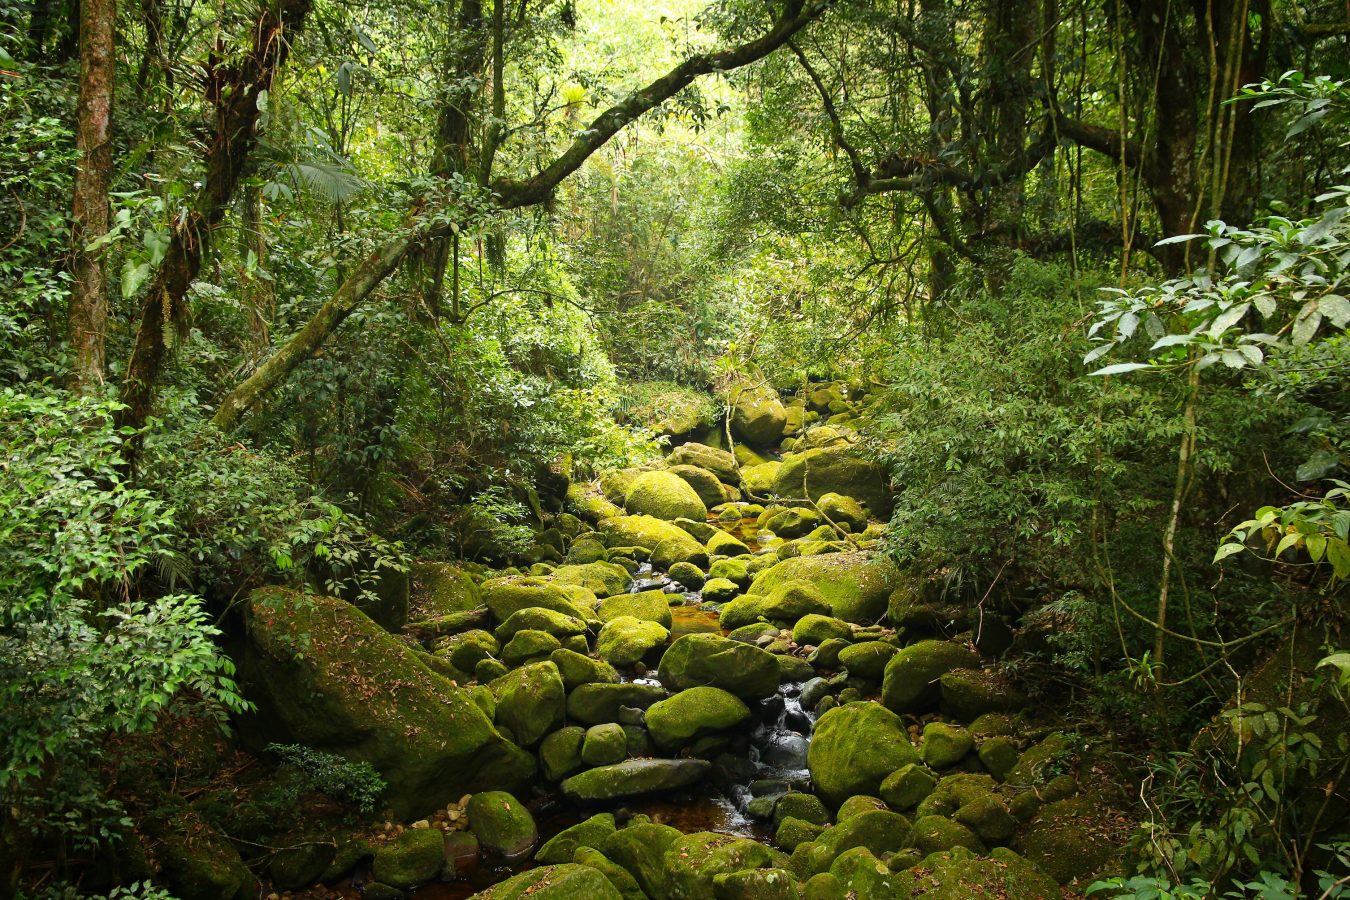 Nature of Amazon Rainforest in Brazil.